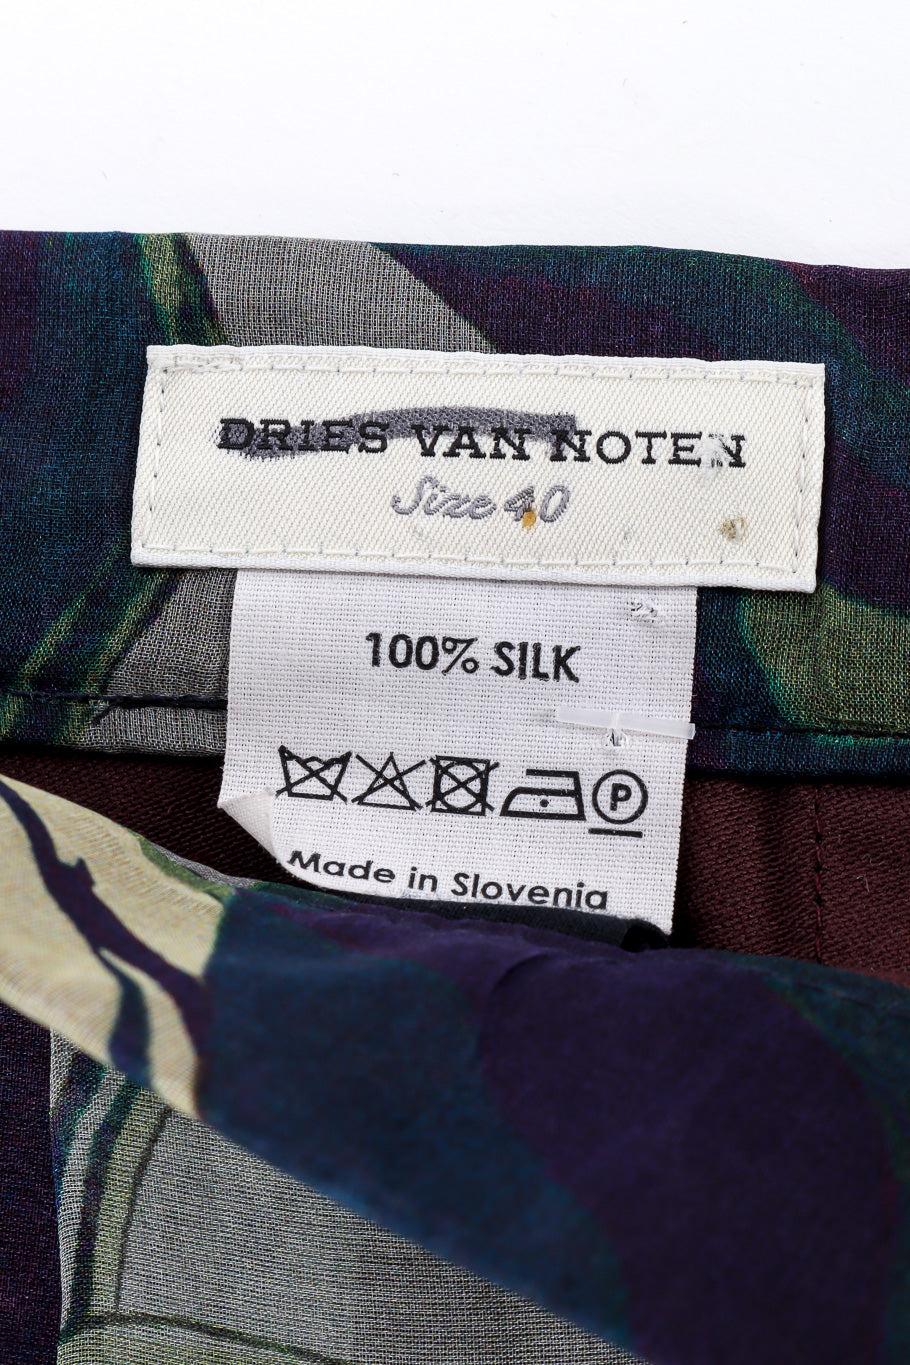 Dries Van Noten Floral Silk Lounge Pant label with strikethrough mark closeup @Recessla